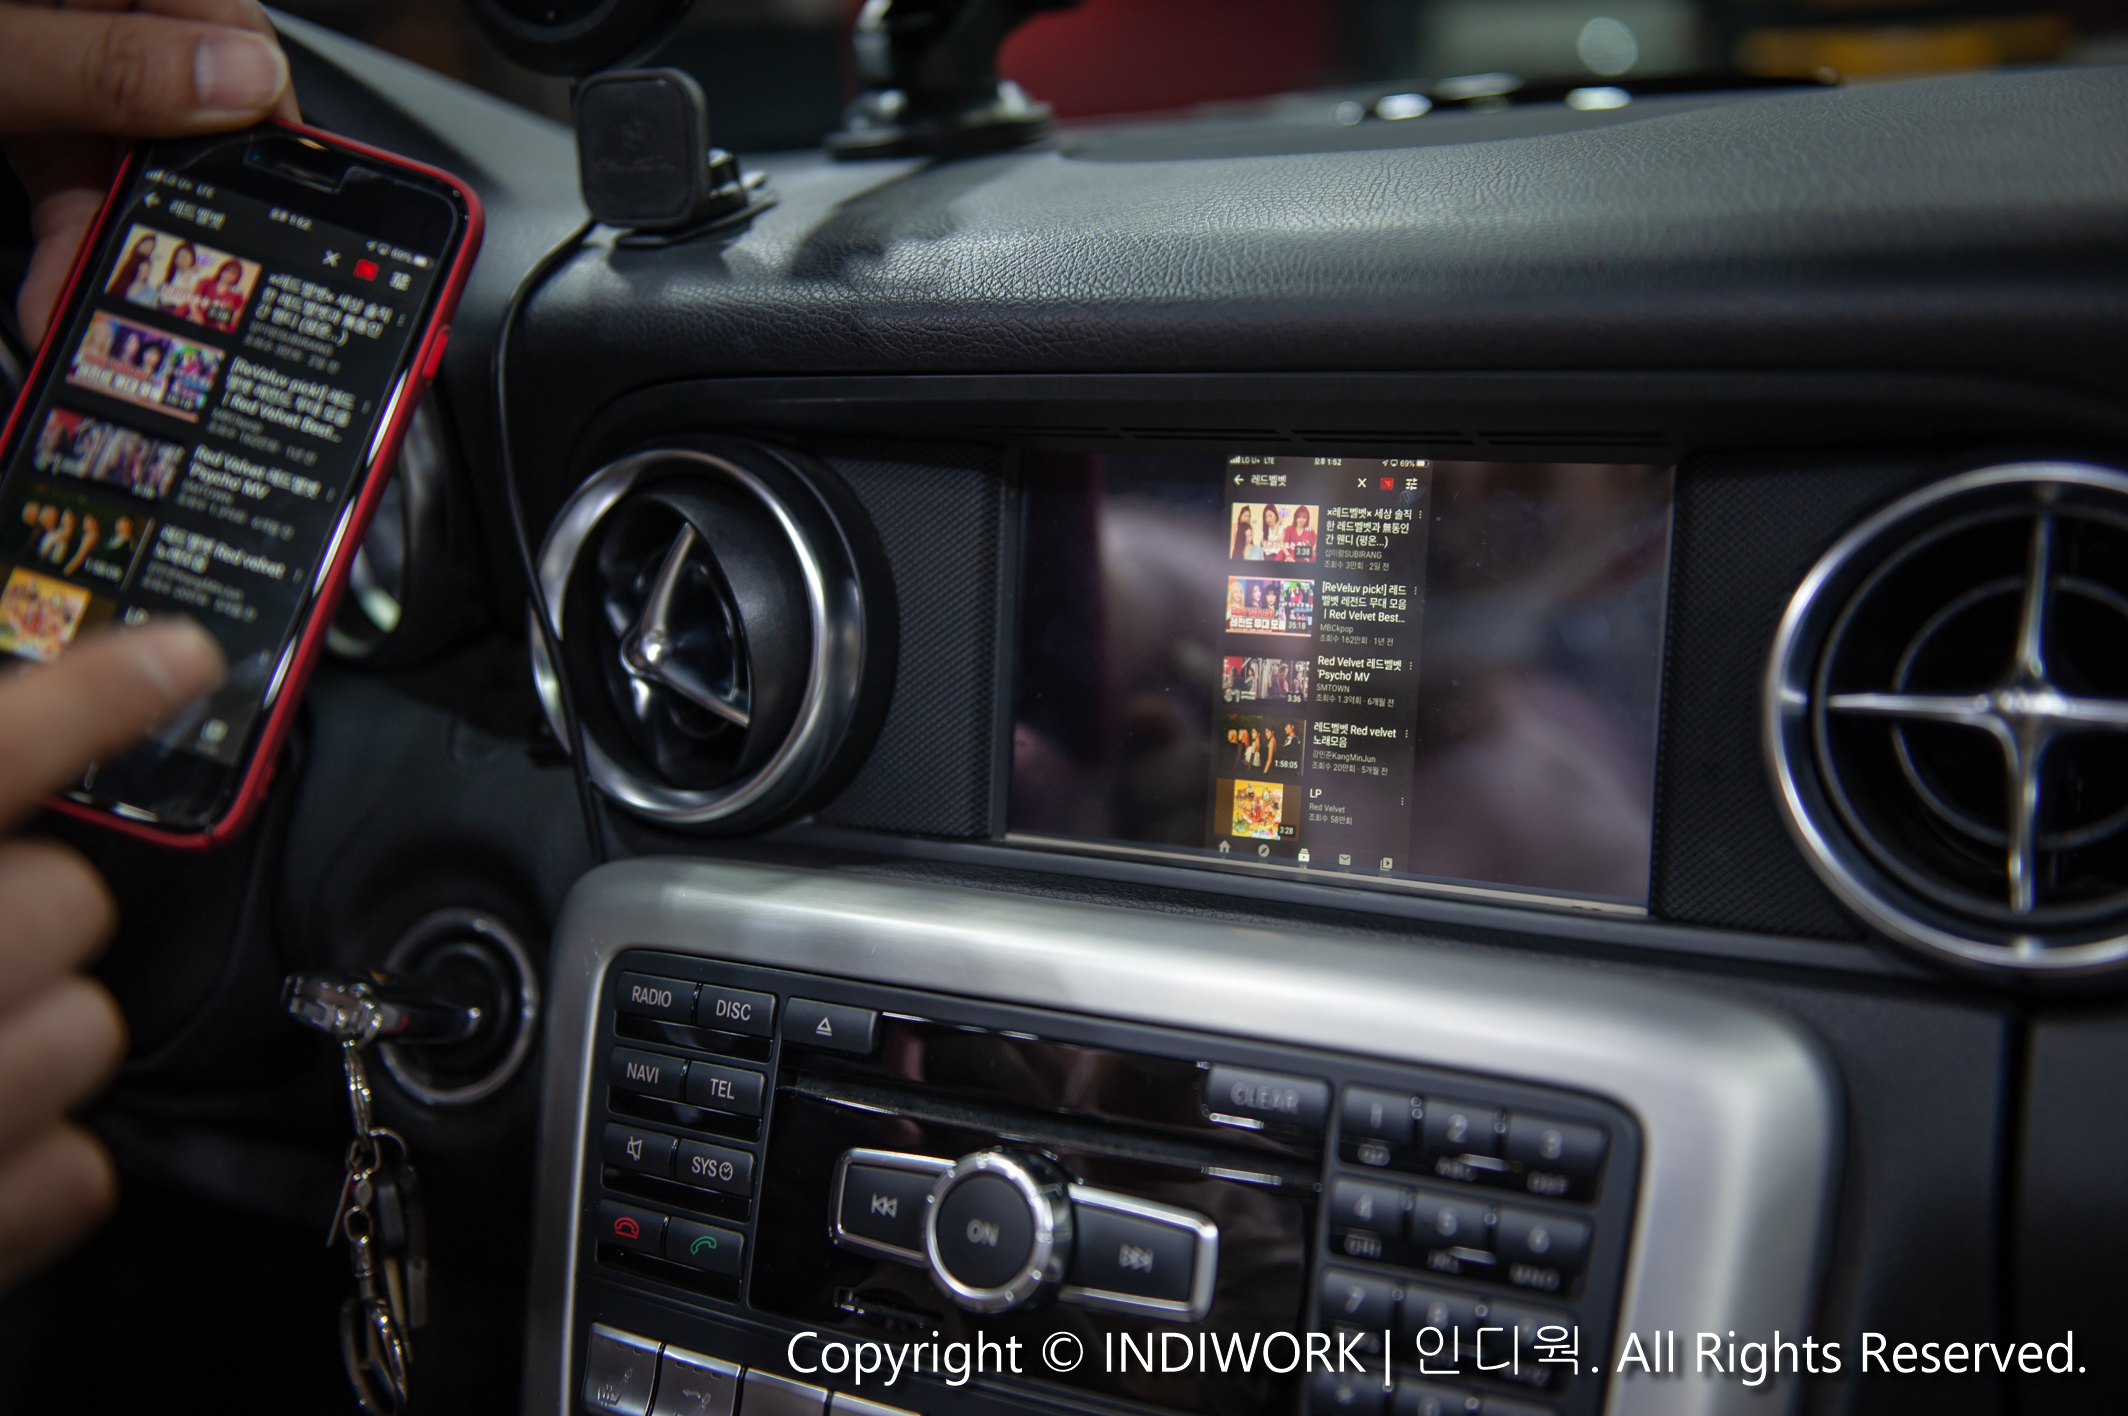 Apple CarPlay,smartphone mirroring for Mercedes 2012 SLK-Class R172 "SCB-NTG4.5"